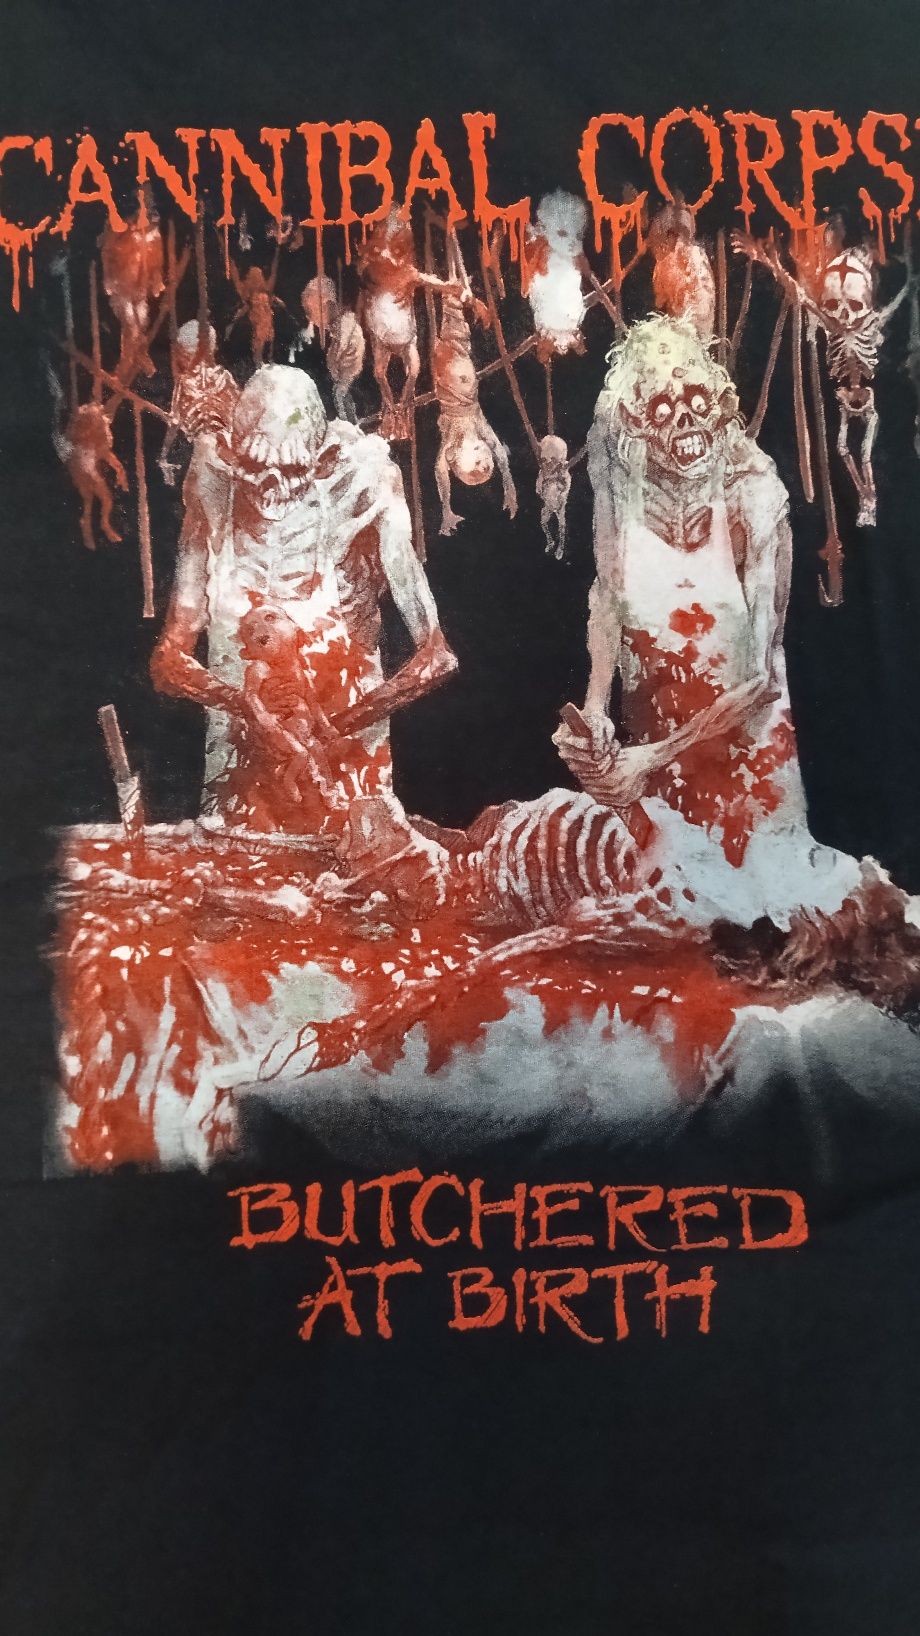 футболка  Cannibal corpse,